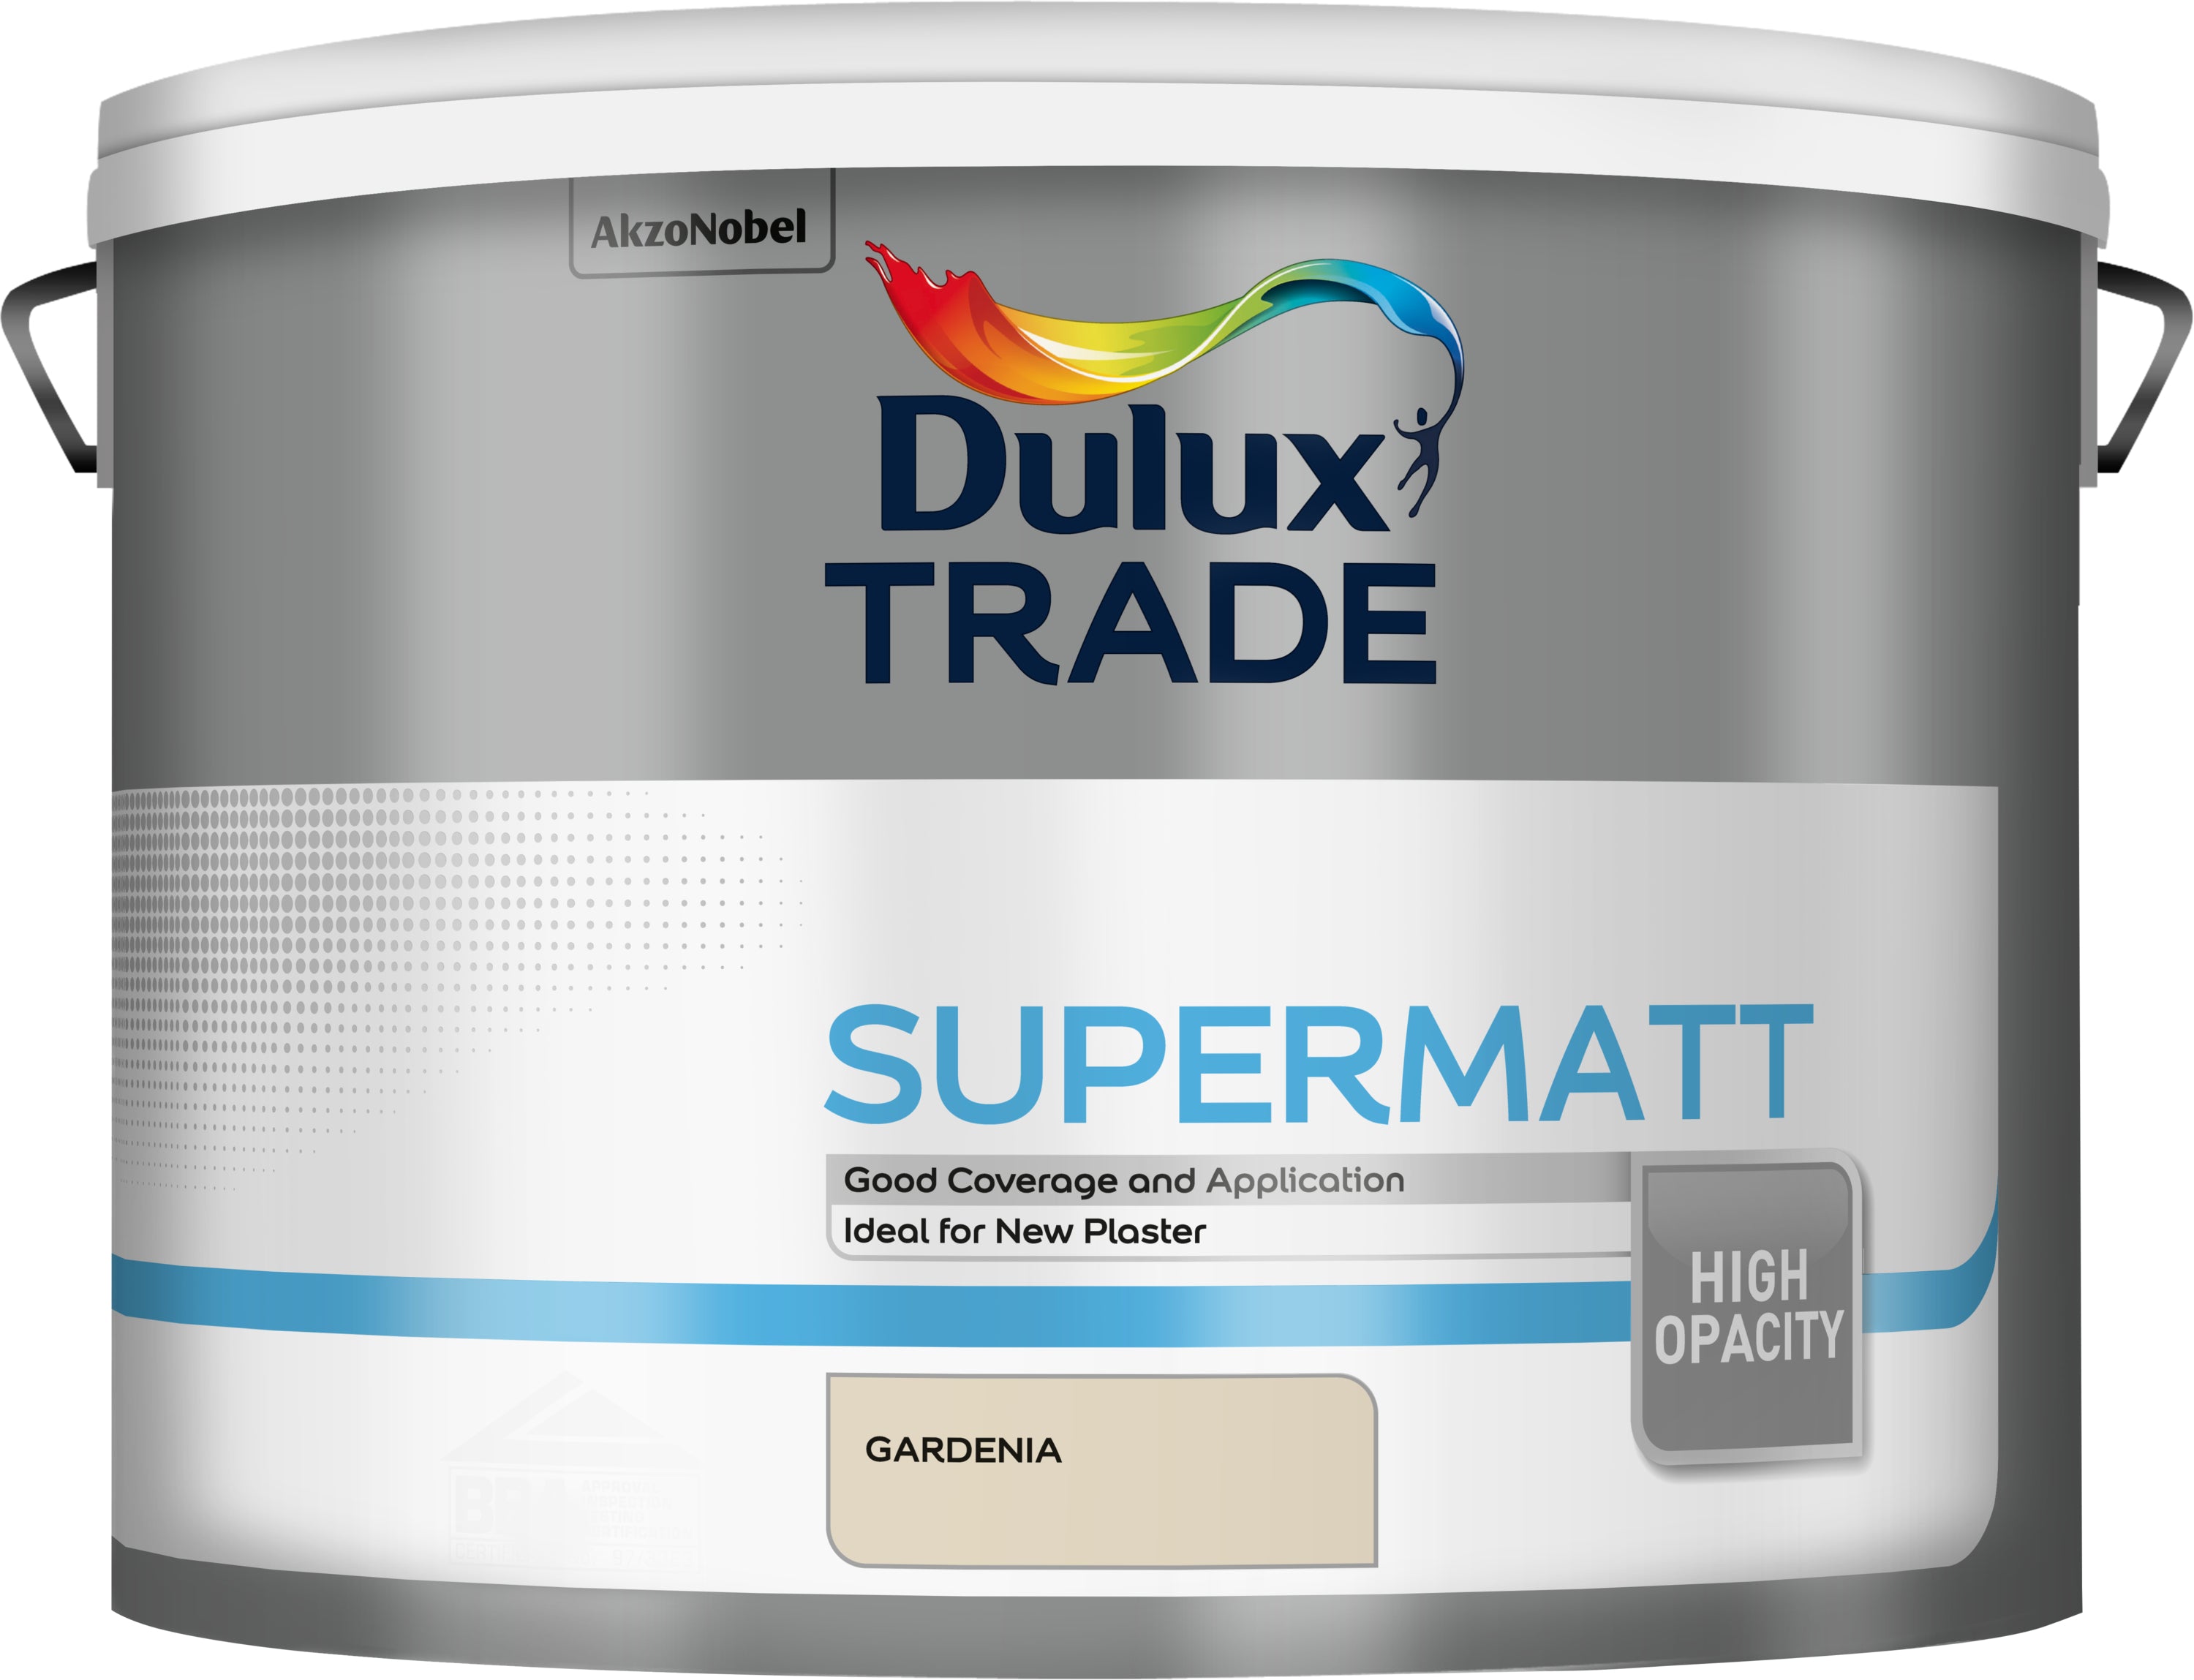 Dulux Trade Supermatt Gardenia 10L